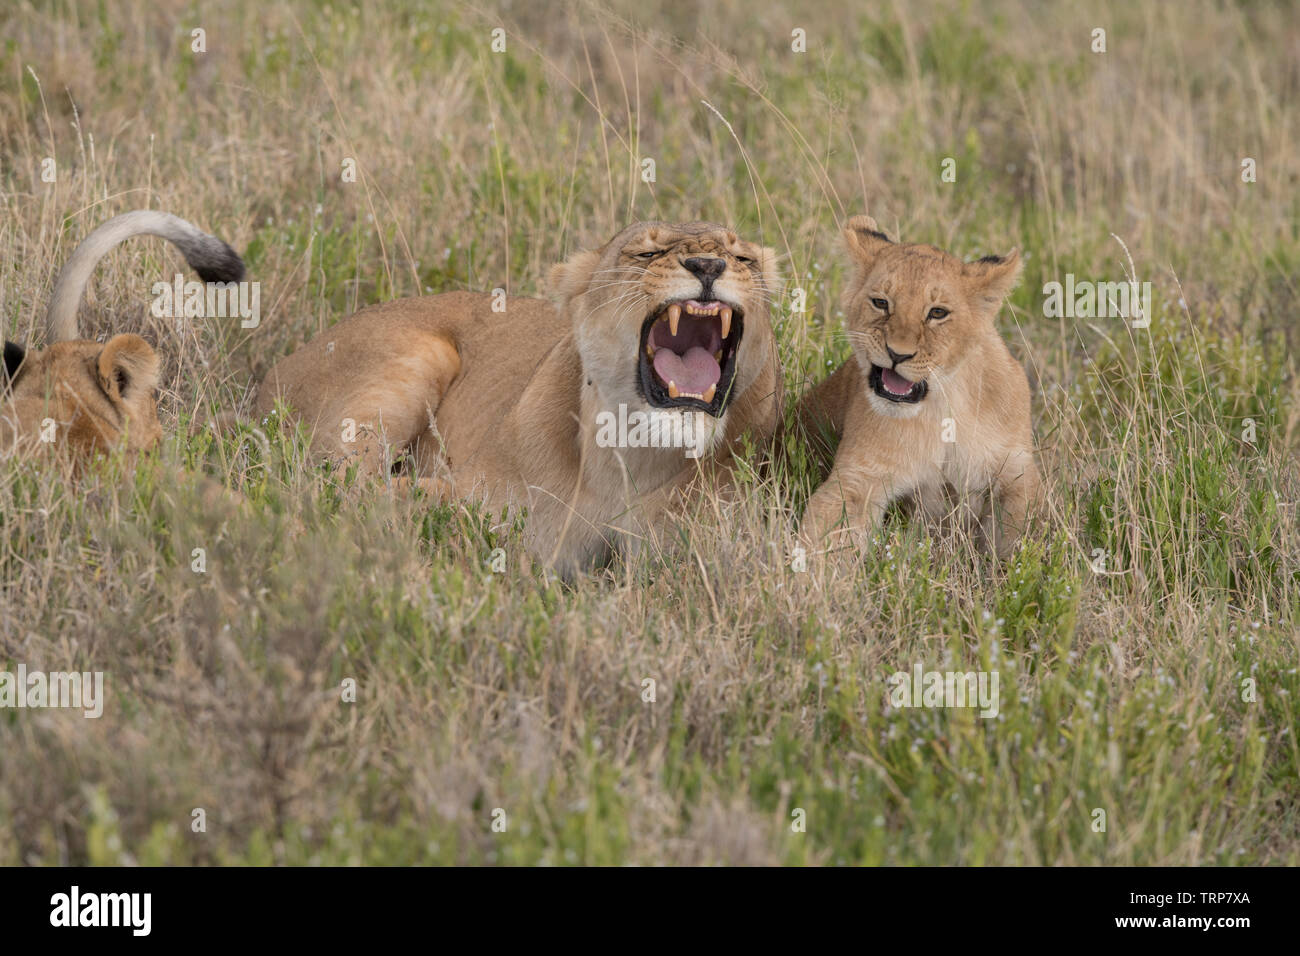 Lion cub imitating lioness snarling, Tanzania Stock Photo